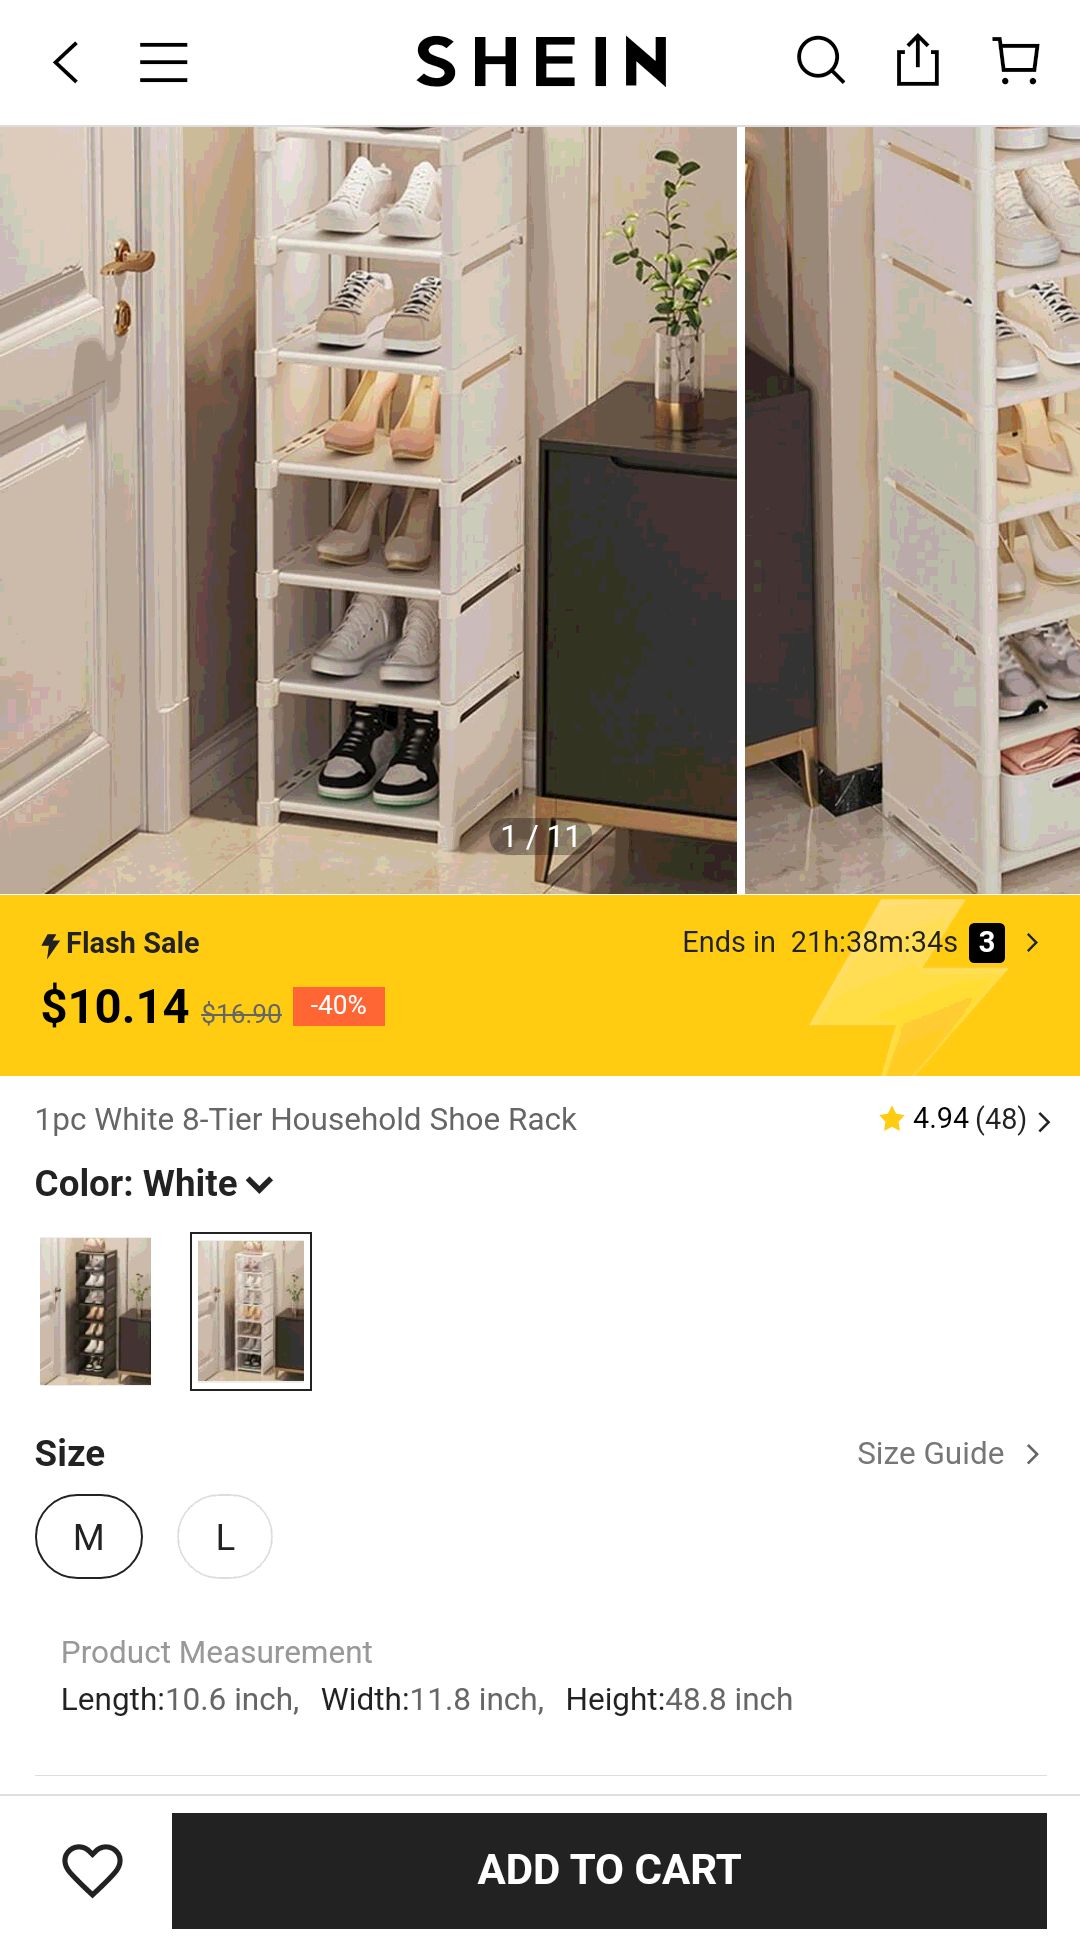 1pc White 8-tier Household Shoe Rack | SHEIN USA